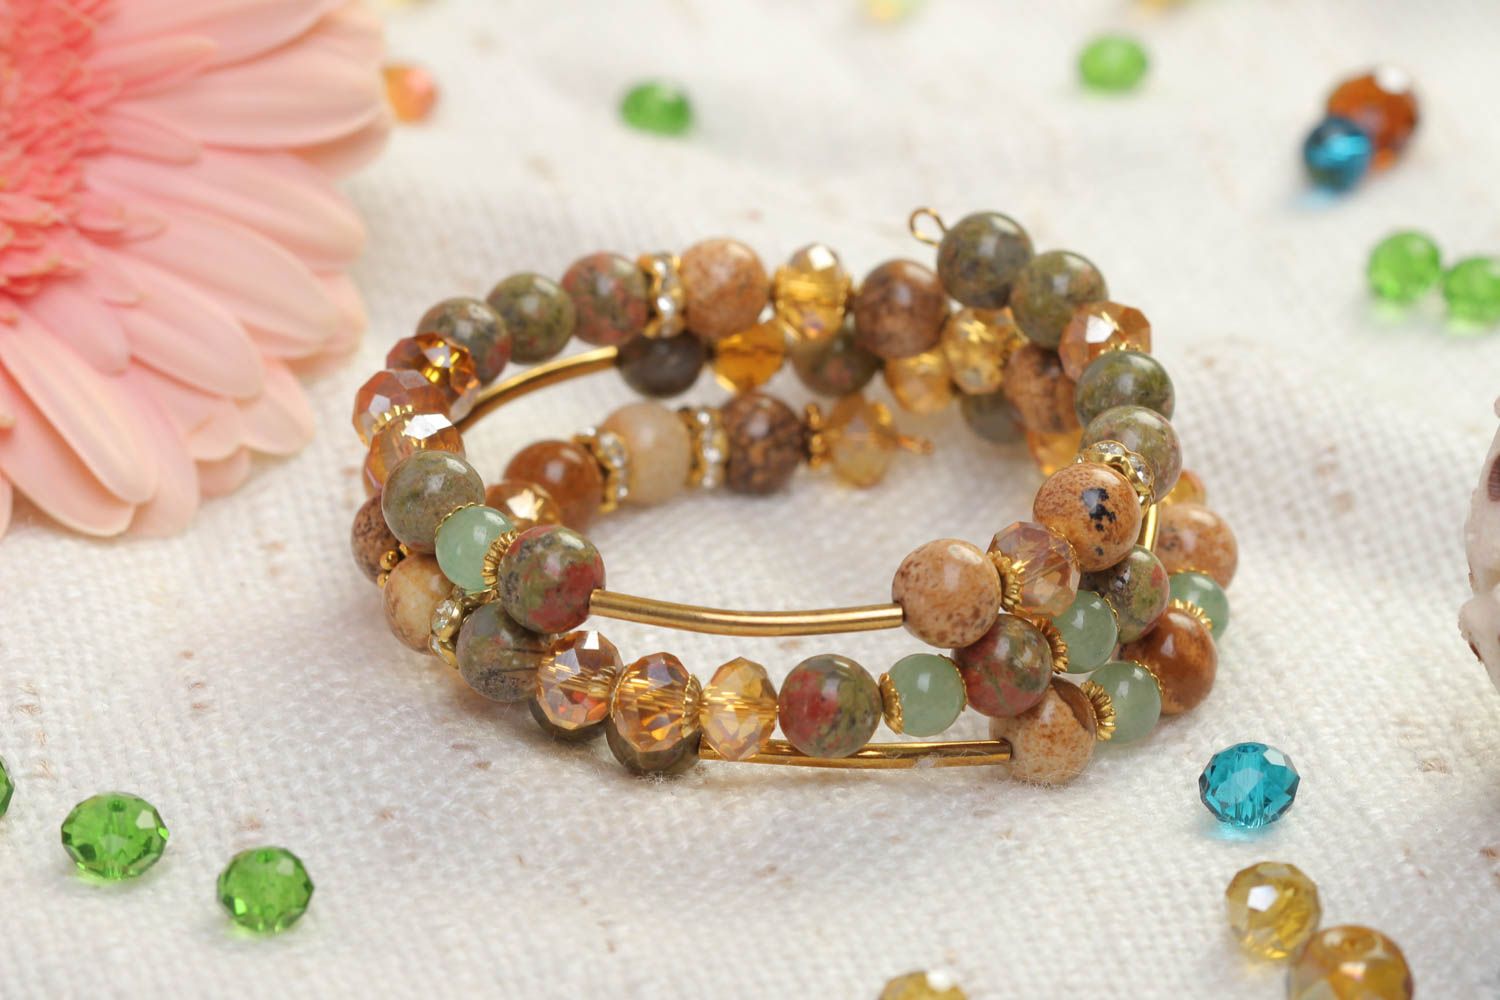 Stylish handmade gemstone bead bracelet artisan jewelry designs gifts for her photo 1